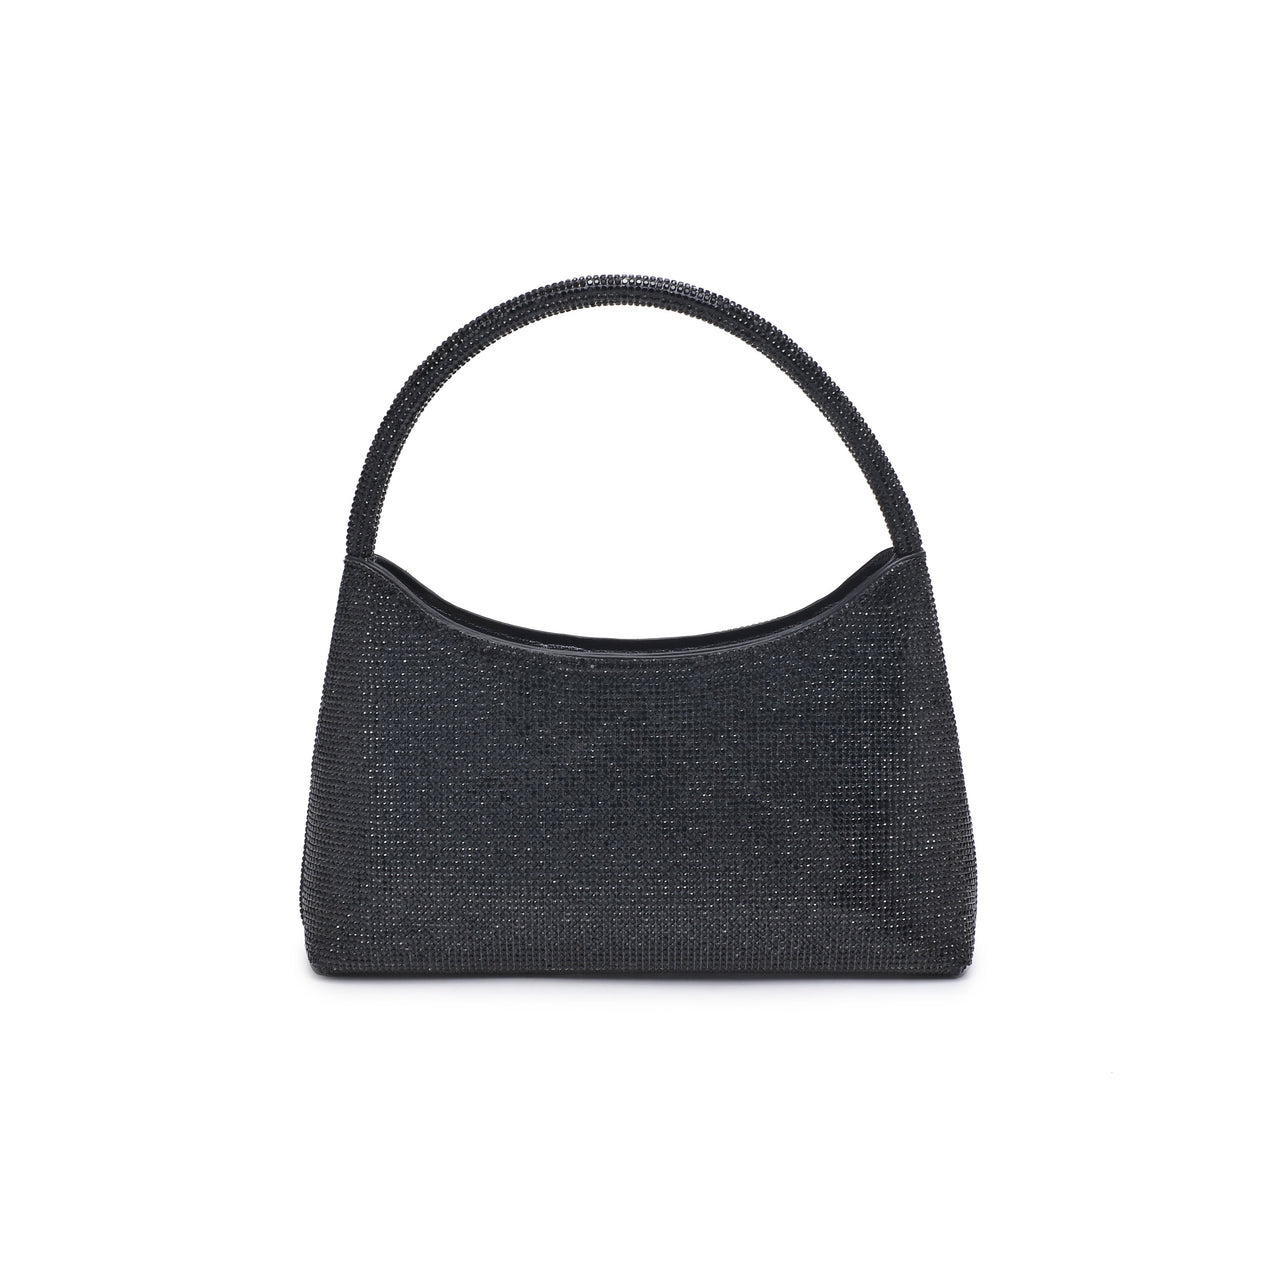 Qunita Rhinestone Evening Bag Black, Bag by Urban Expressions | LIT Boutique